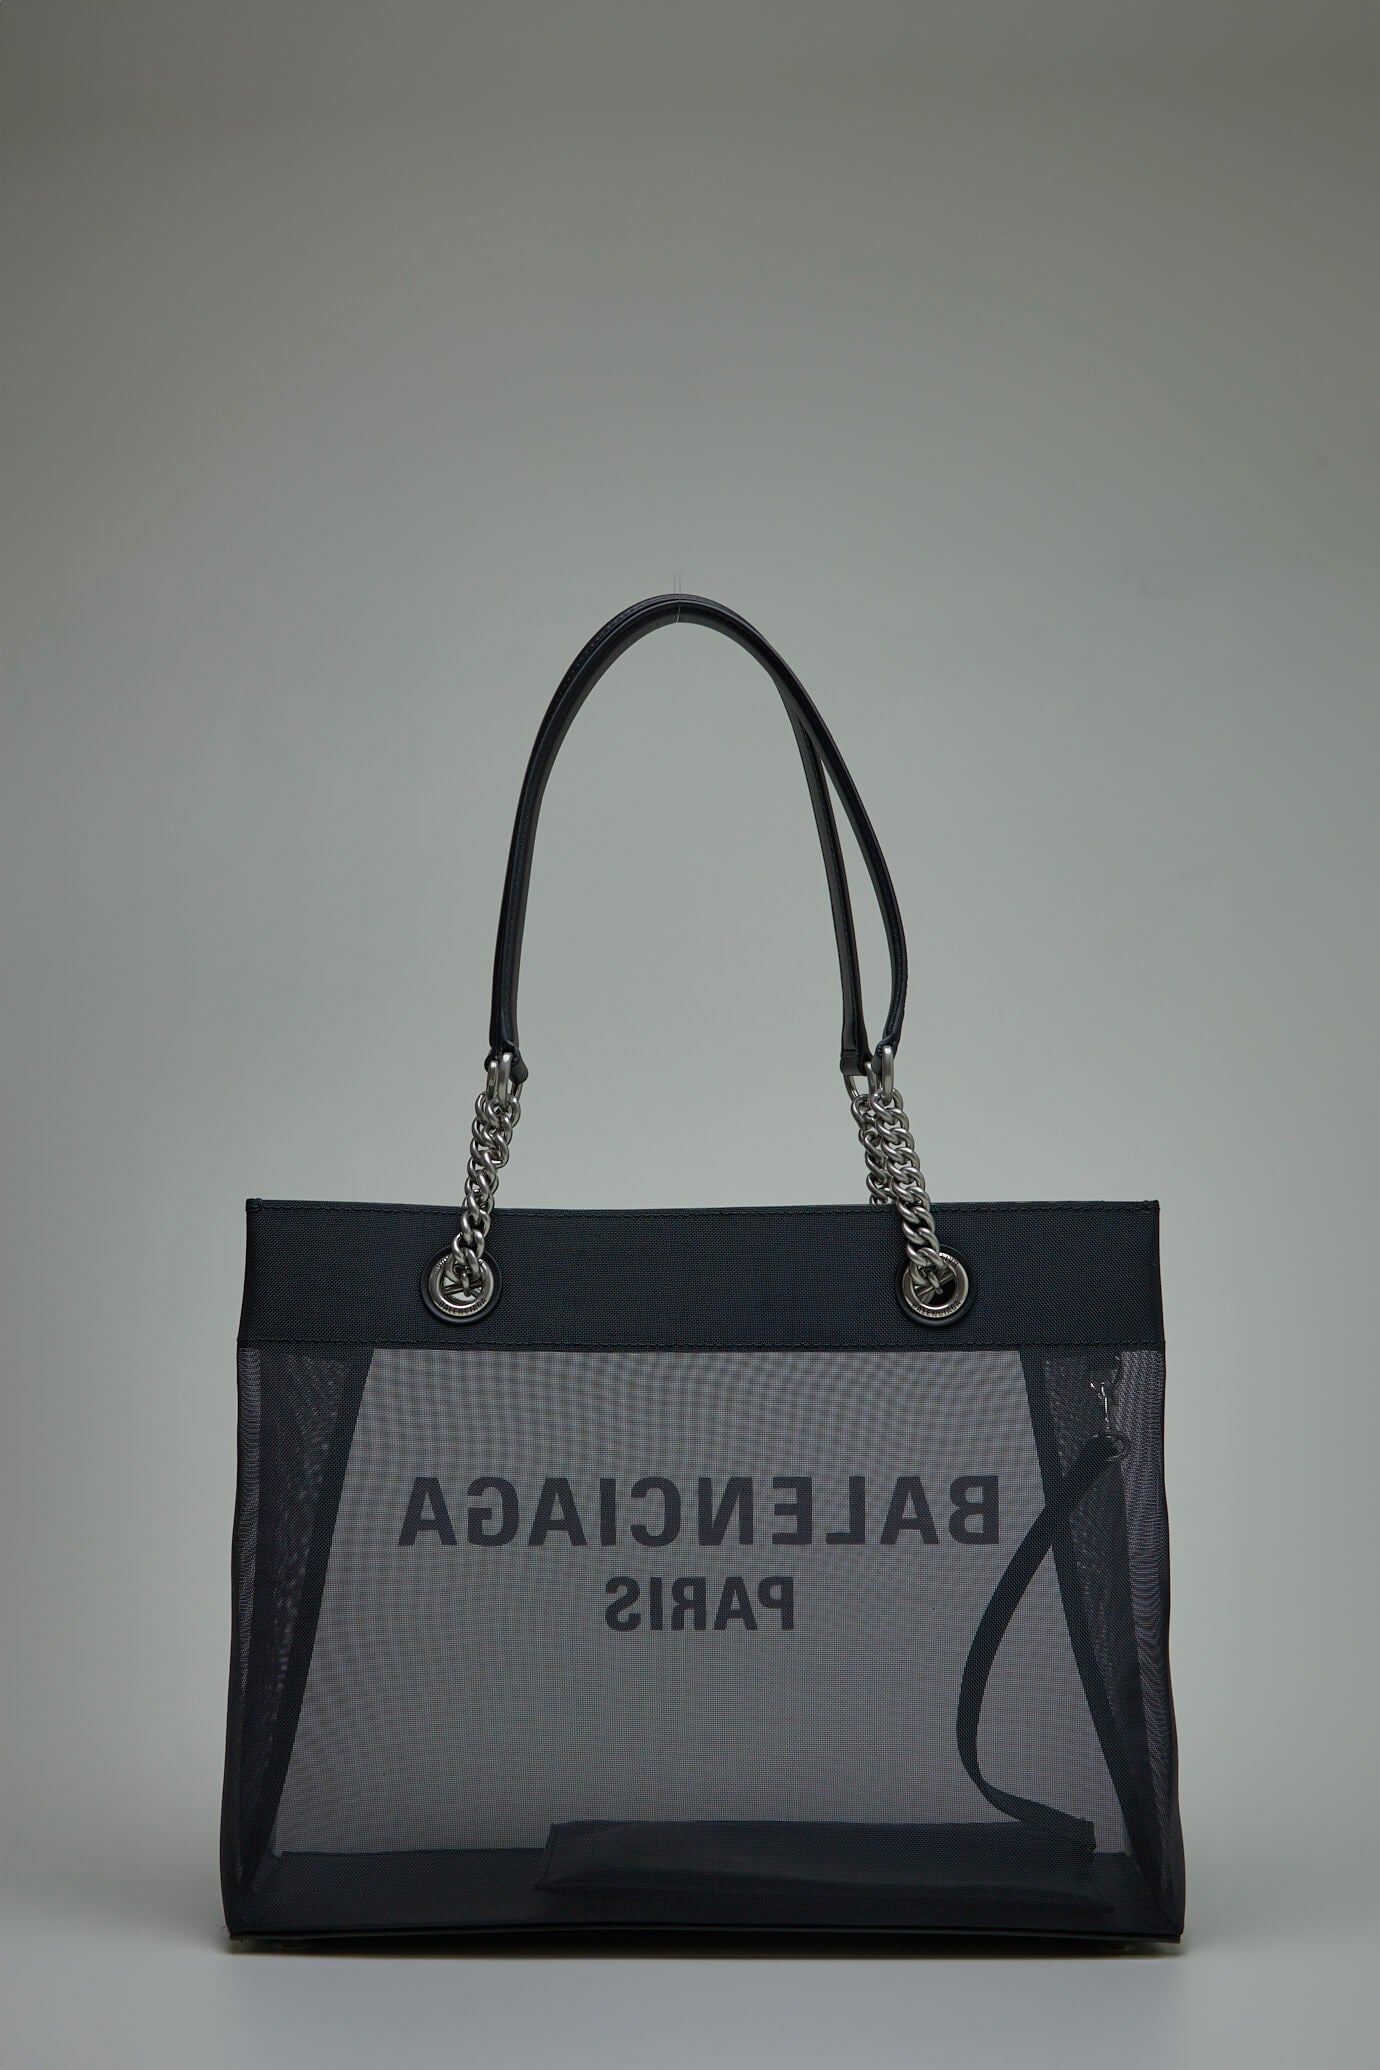 Women's Duty Free Small Tote Bag in Black